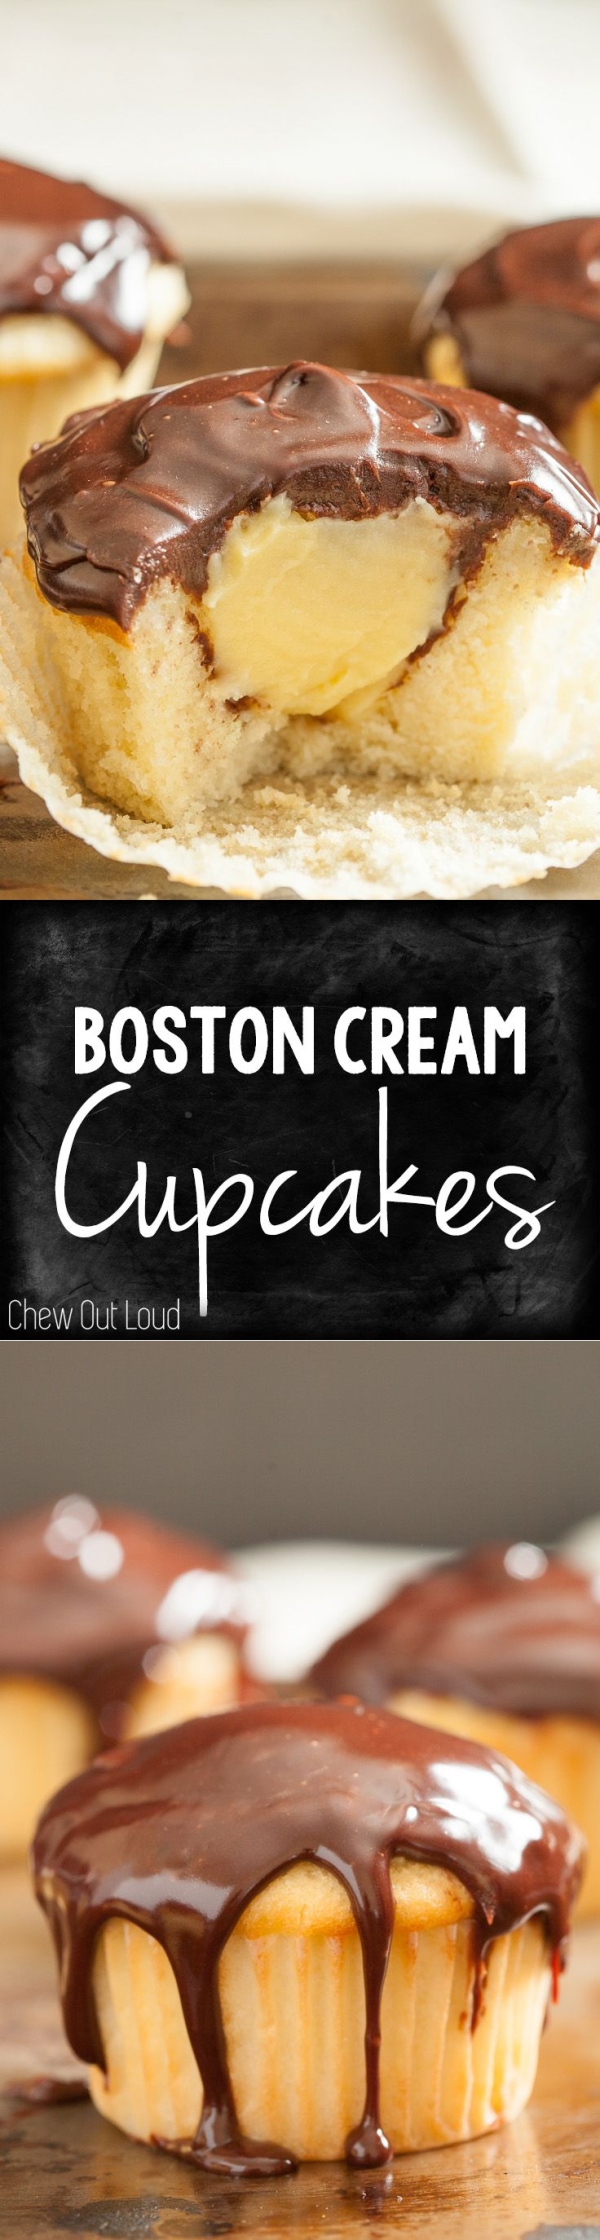 Recipe for Boston Cream Cake with Chocolate